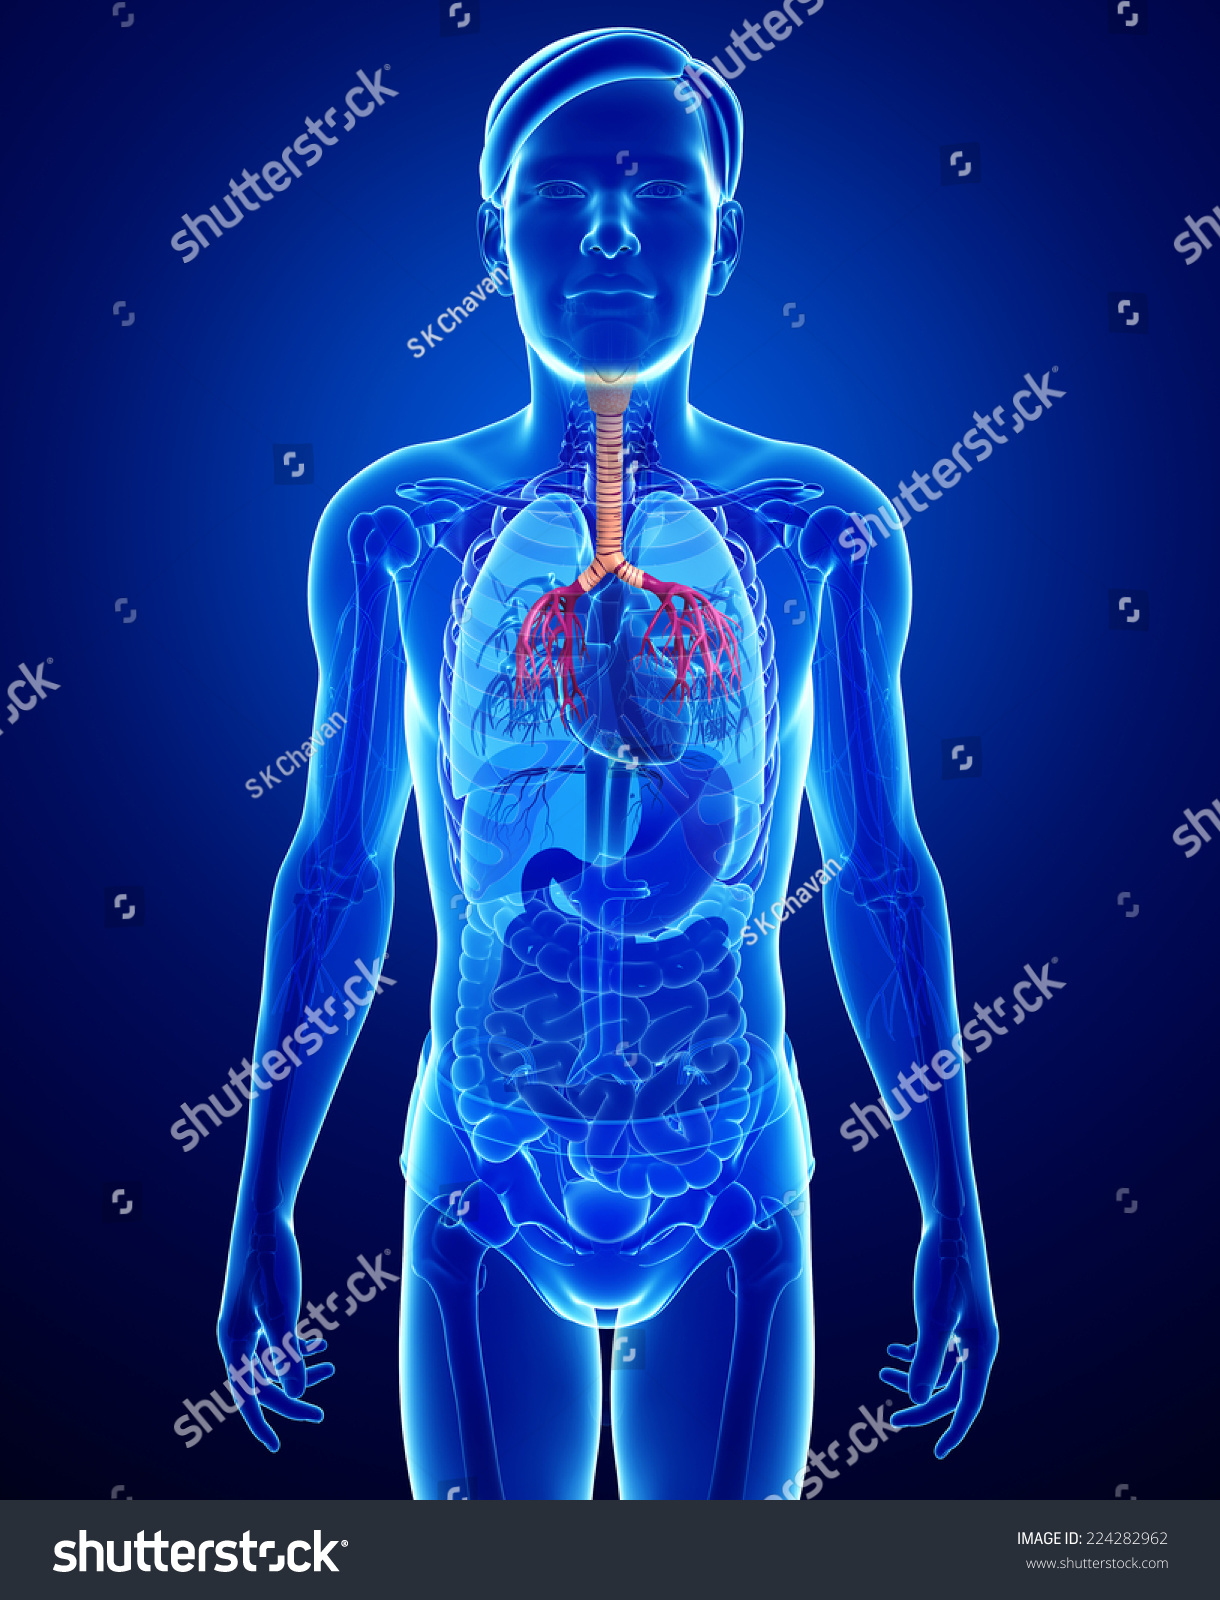 Illustration Of Male Throat Anatomy - 224282962 : Shutterstock